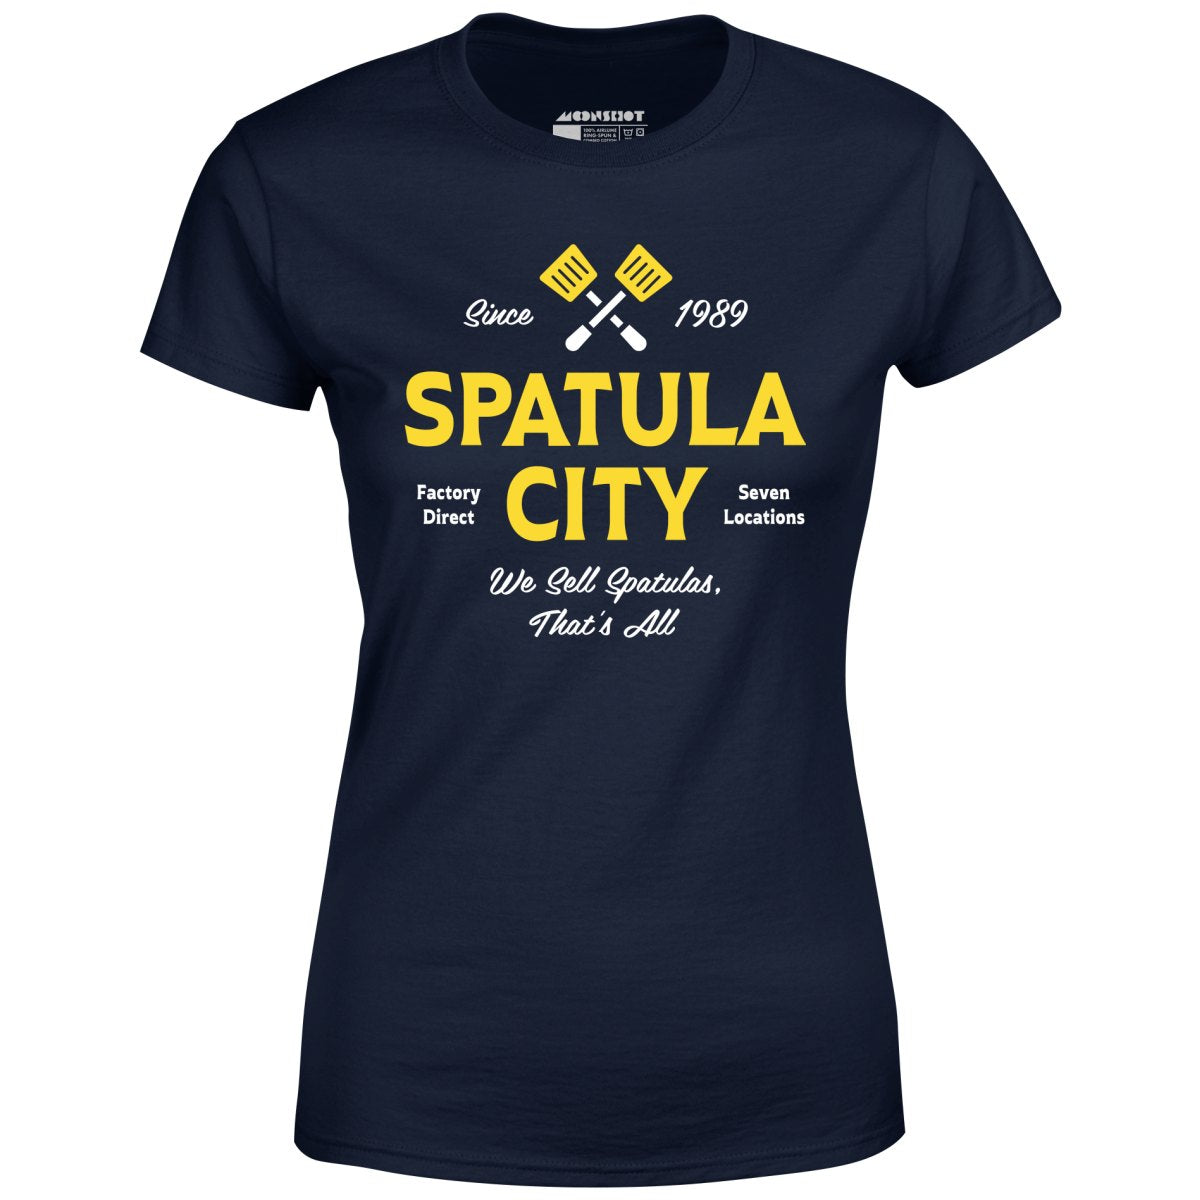 Spatula City - Women's T-Shirt